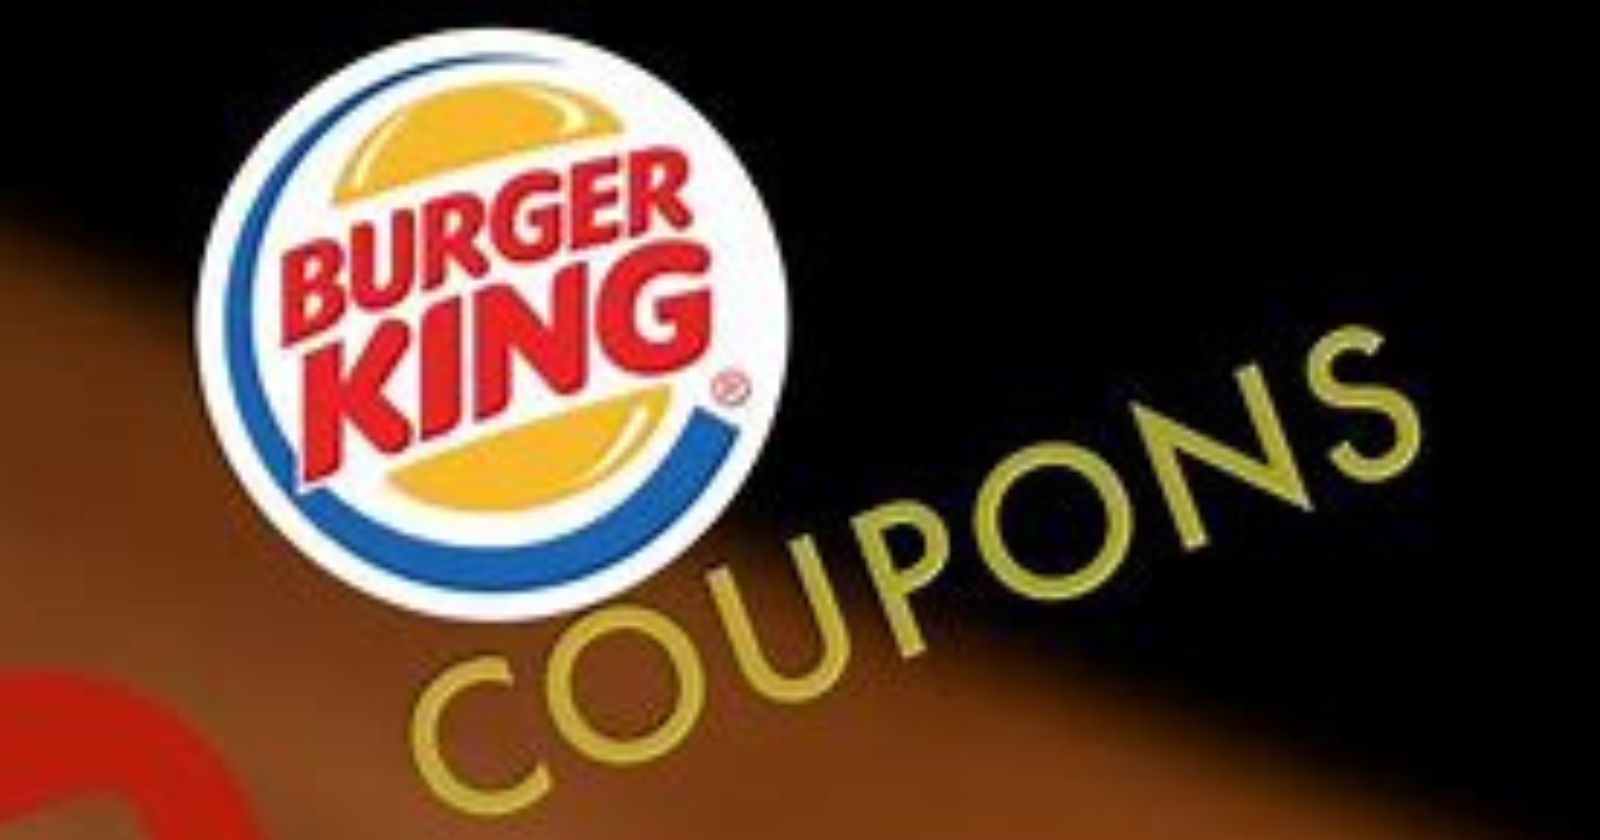 Burger King Discounts